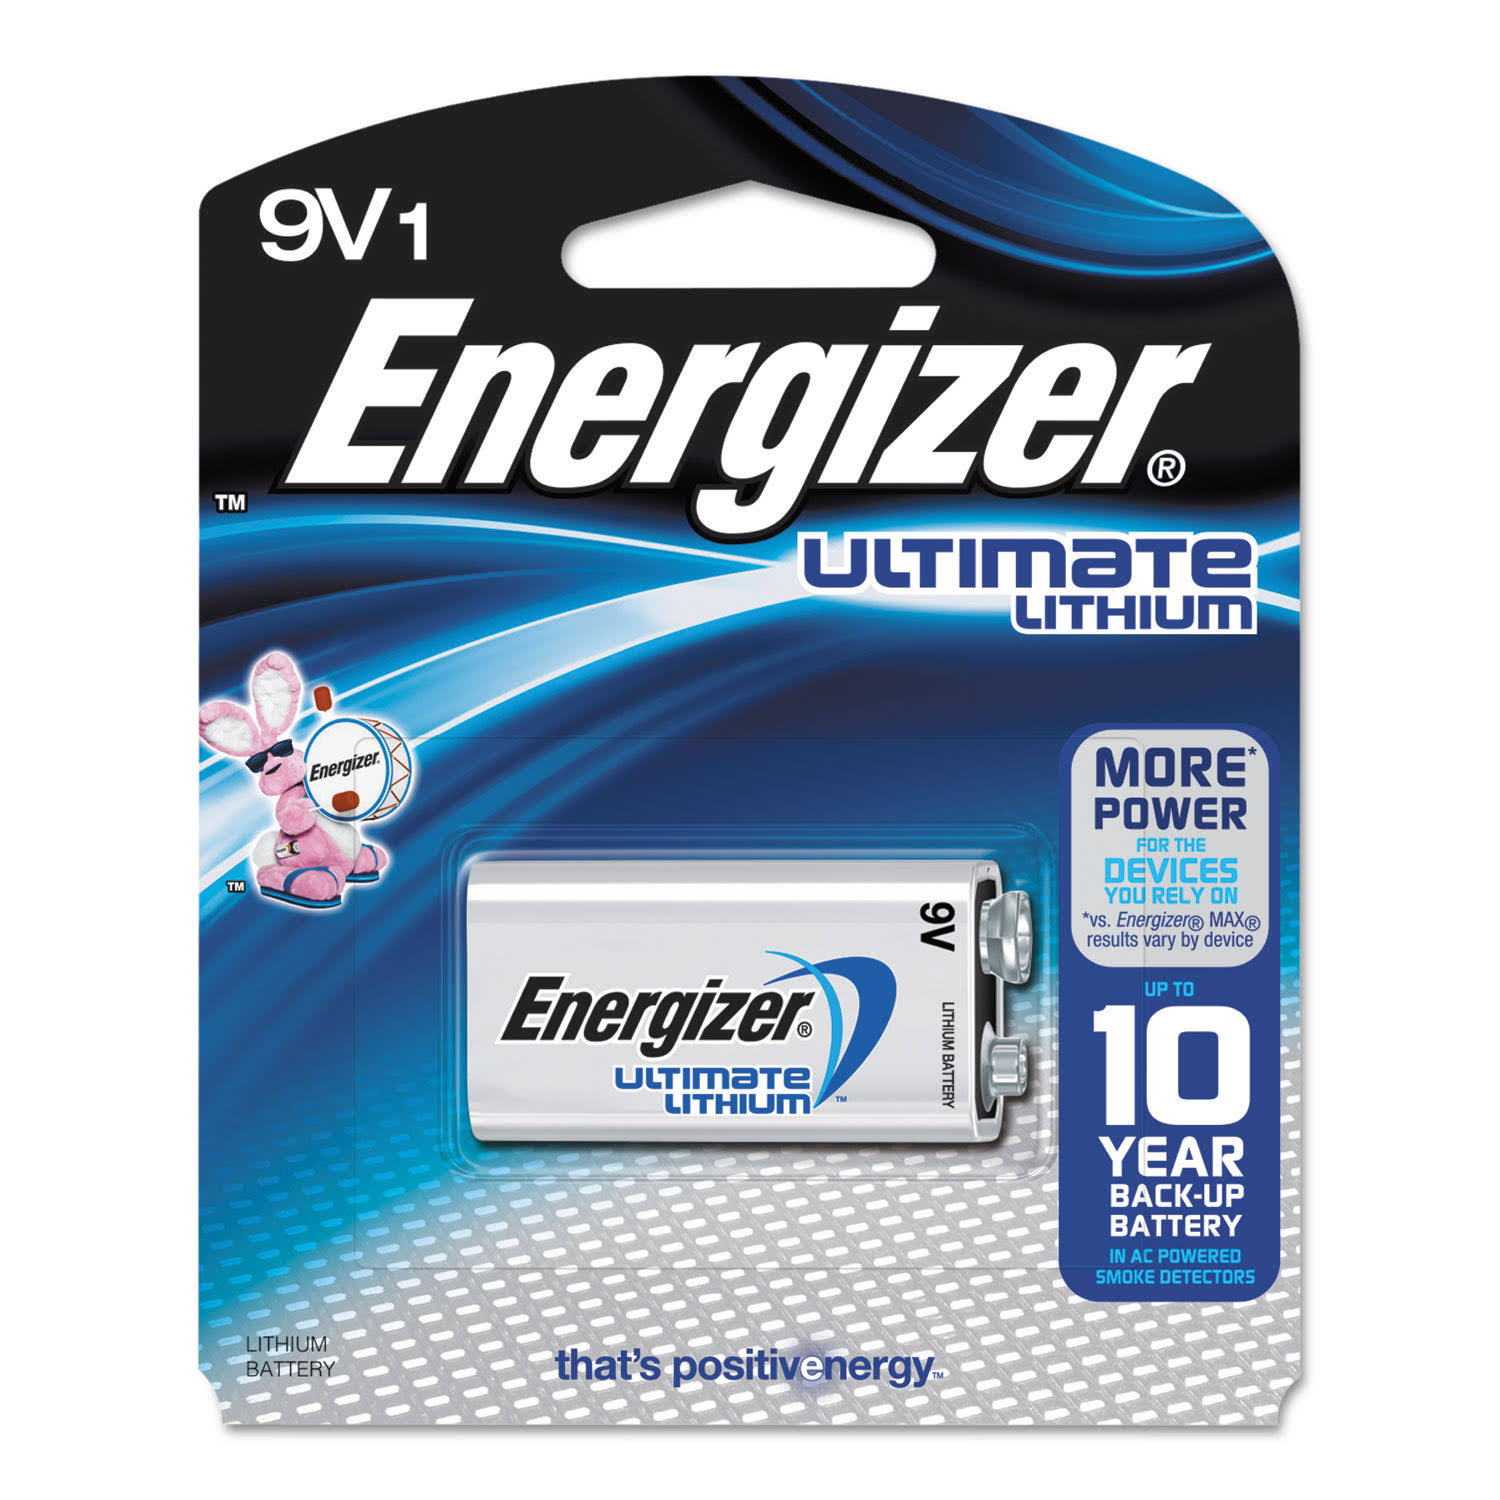 Energizer Ultimate Lithium 9V Battery